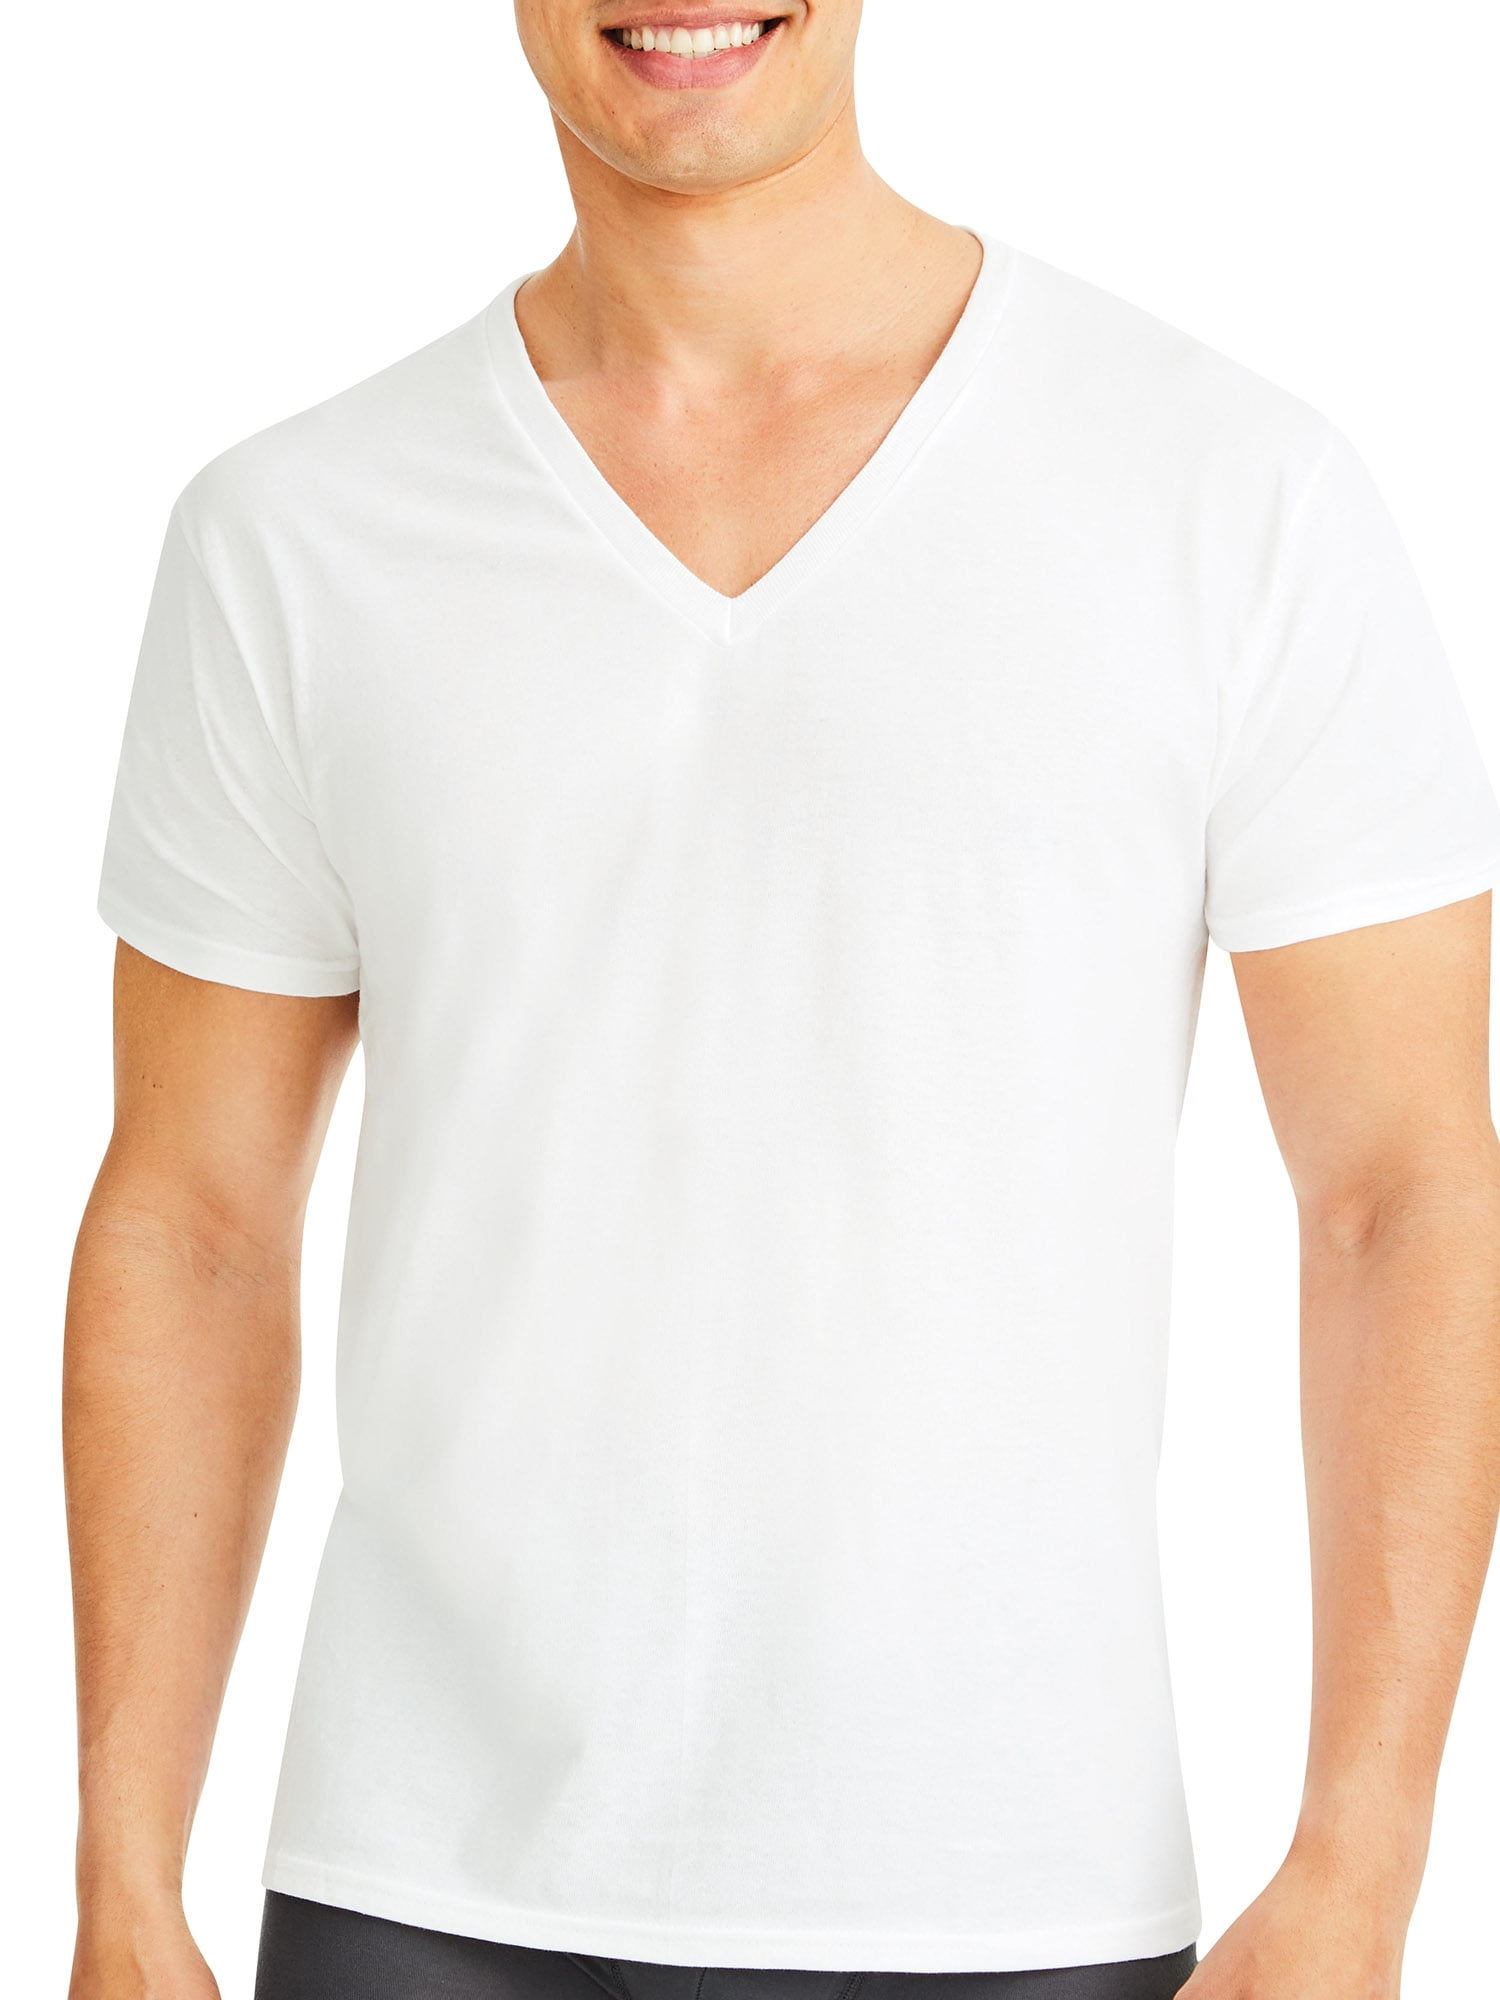 Hanes - Hanes White V Neck ComfortSoft T-Shirts, 10 Pack - Walmart.com ...